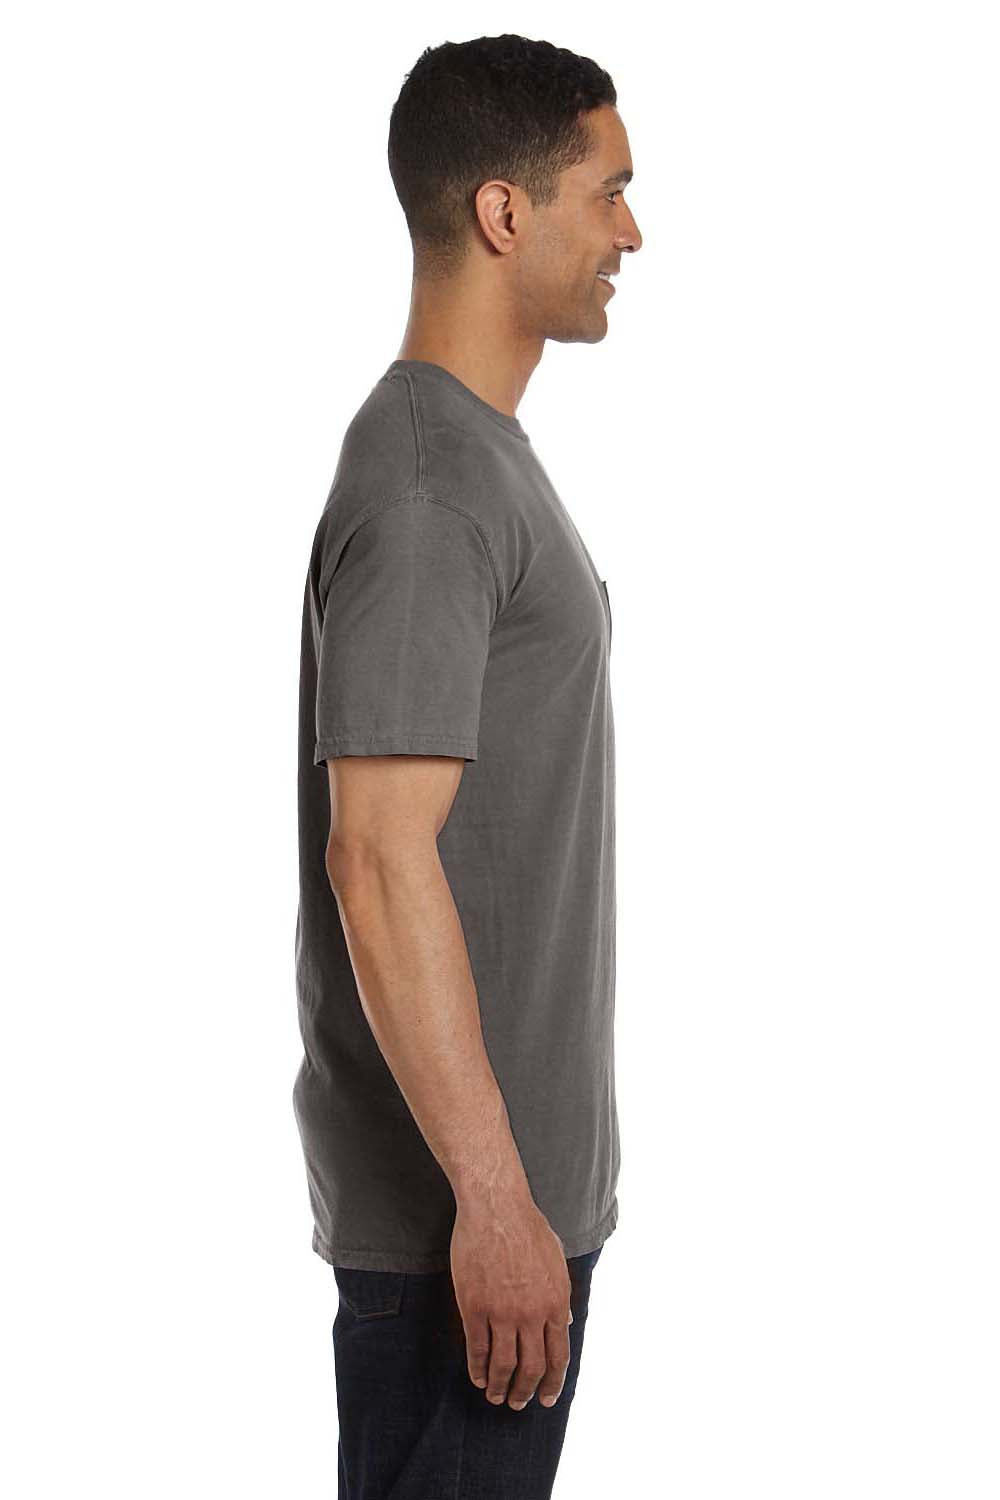 Comfort Colors 6030CC Mens Short Sleeve Crewneck T-Shirt w/ Pocket Pepper Grey Side